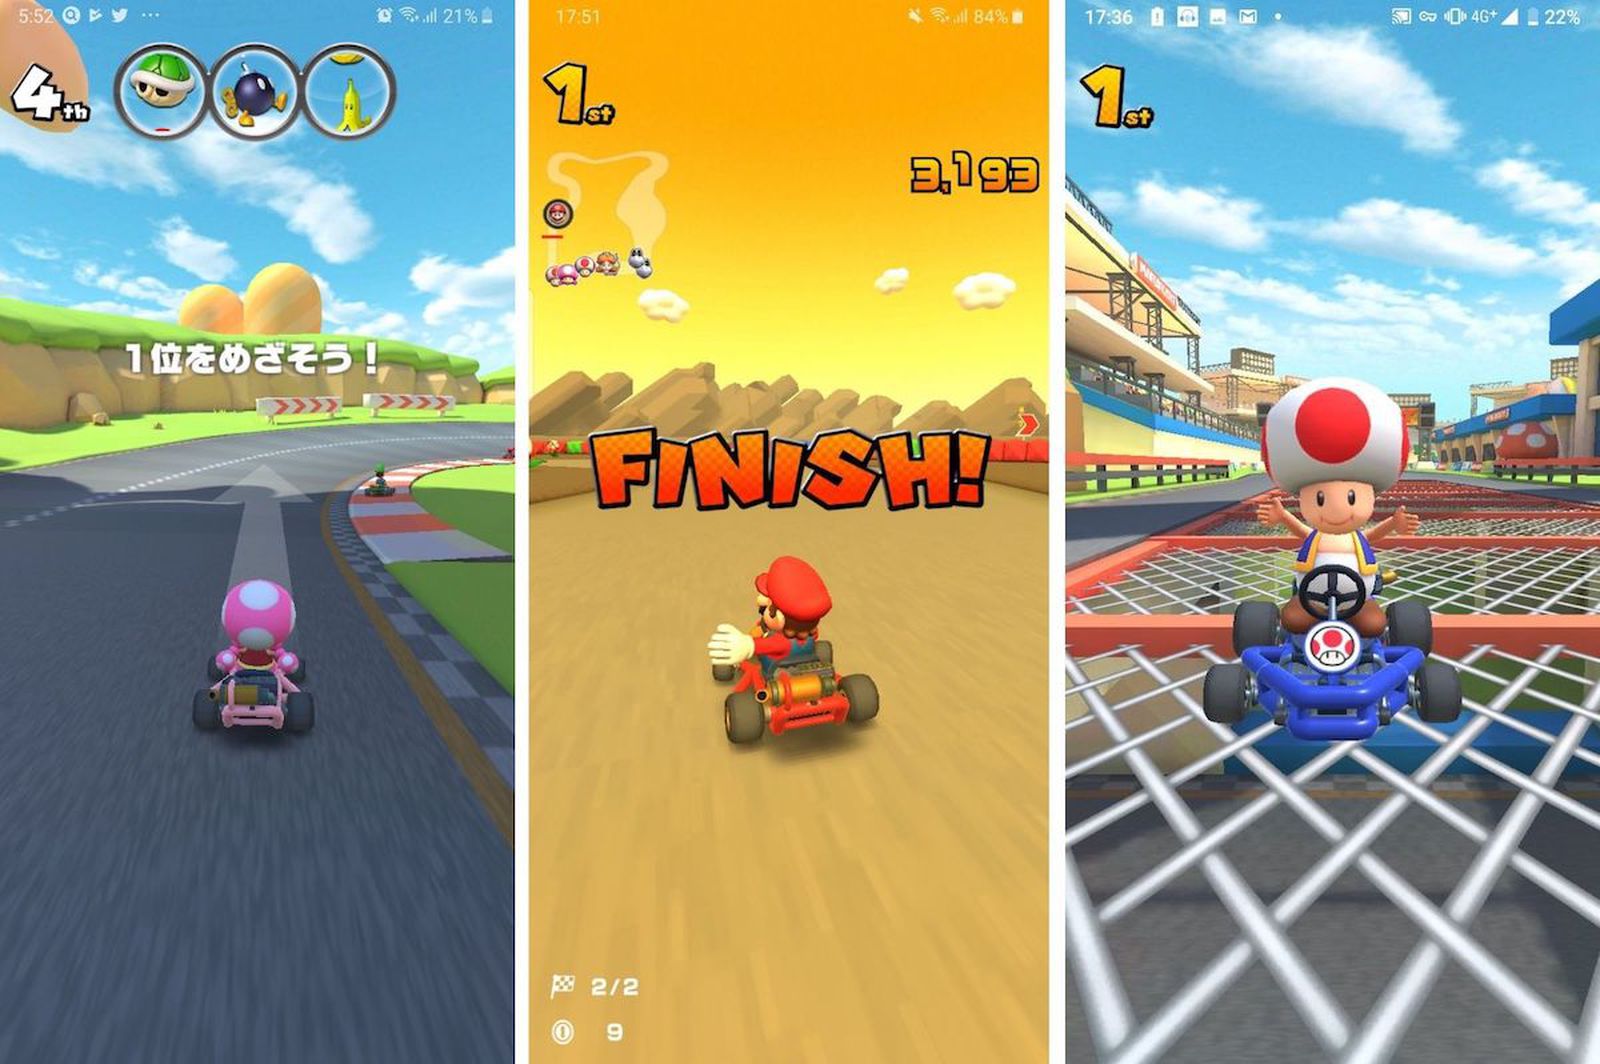 mario kart ios Mario Kart Tour Gameplay Revealed In New Images And Video Shared From Beta Players Macrumors mario kart ios